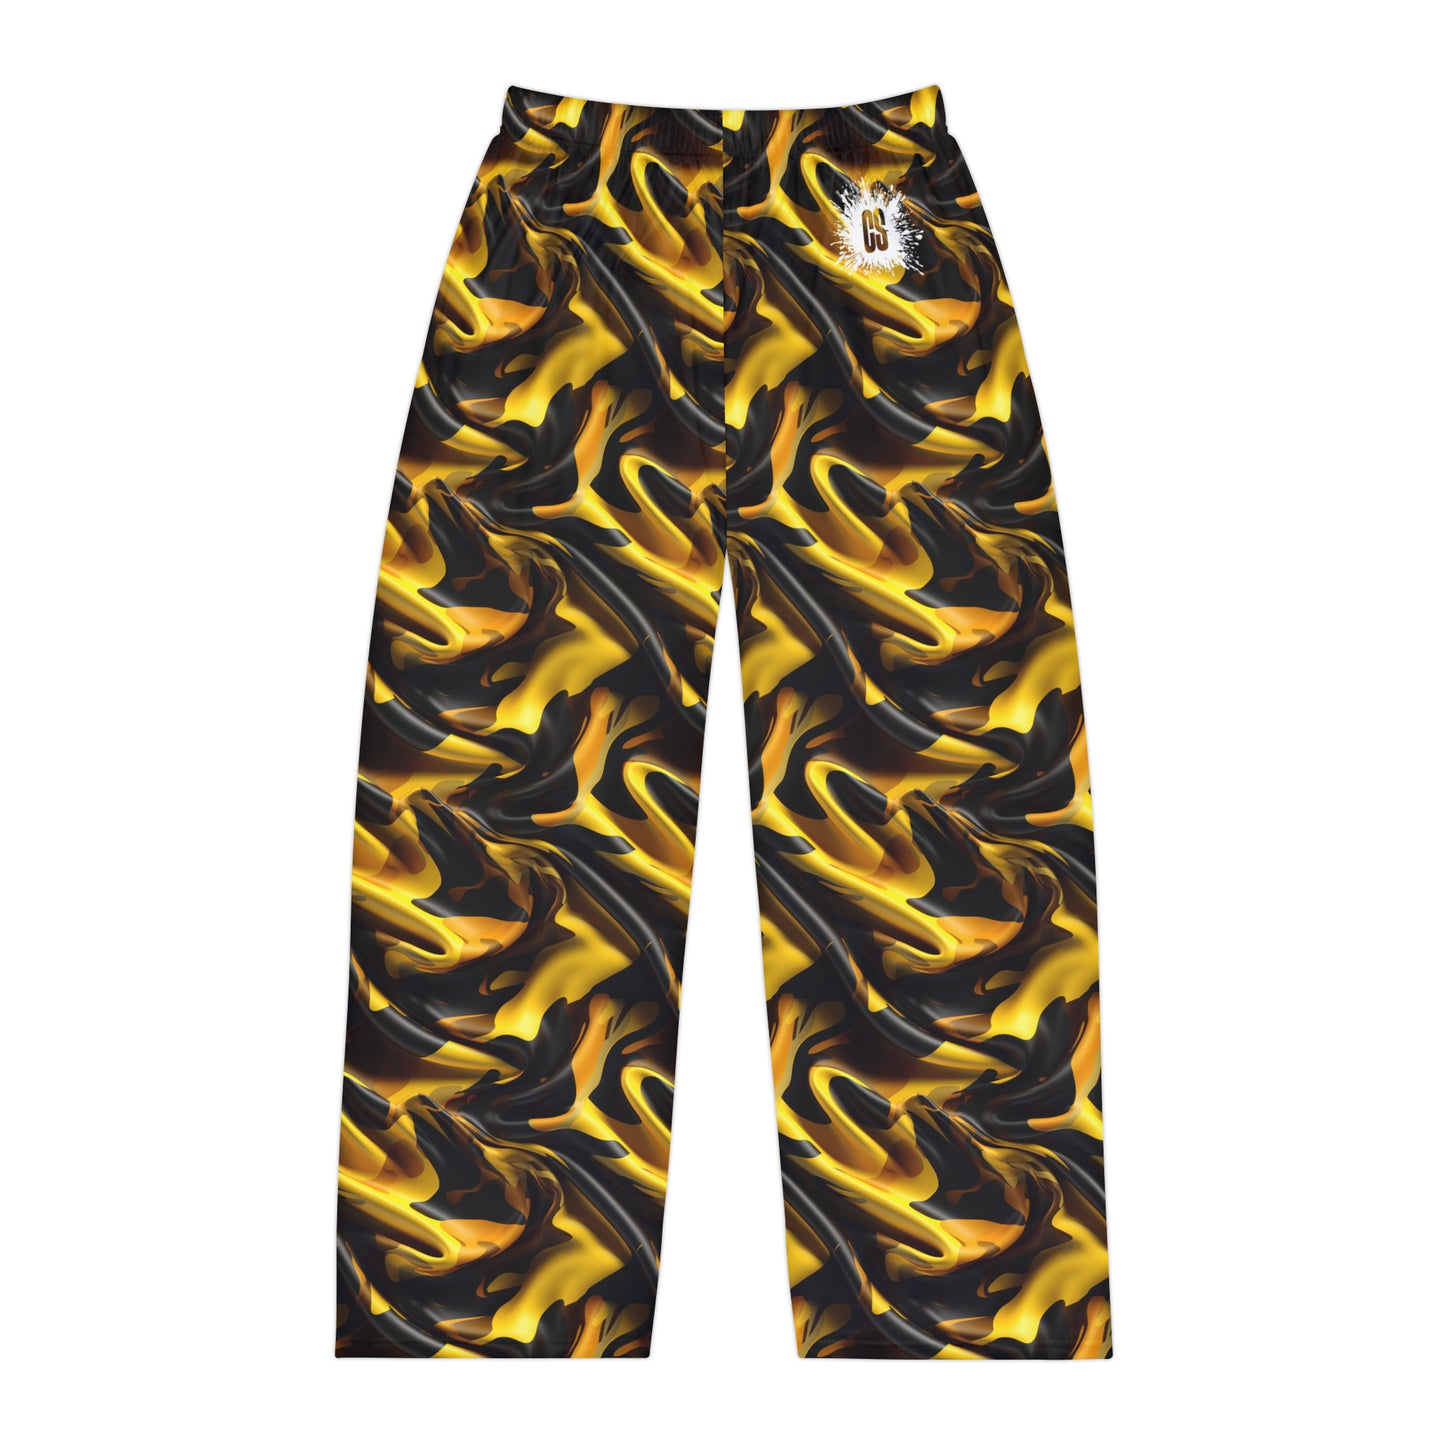 Black & Gold Satin Men's Pajama Pants